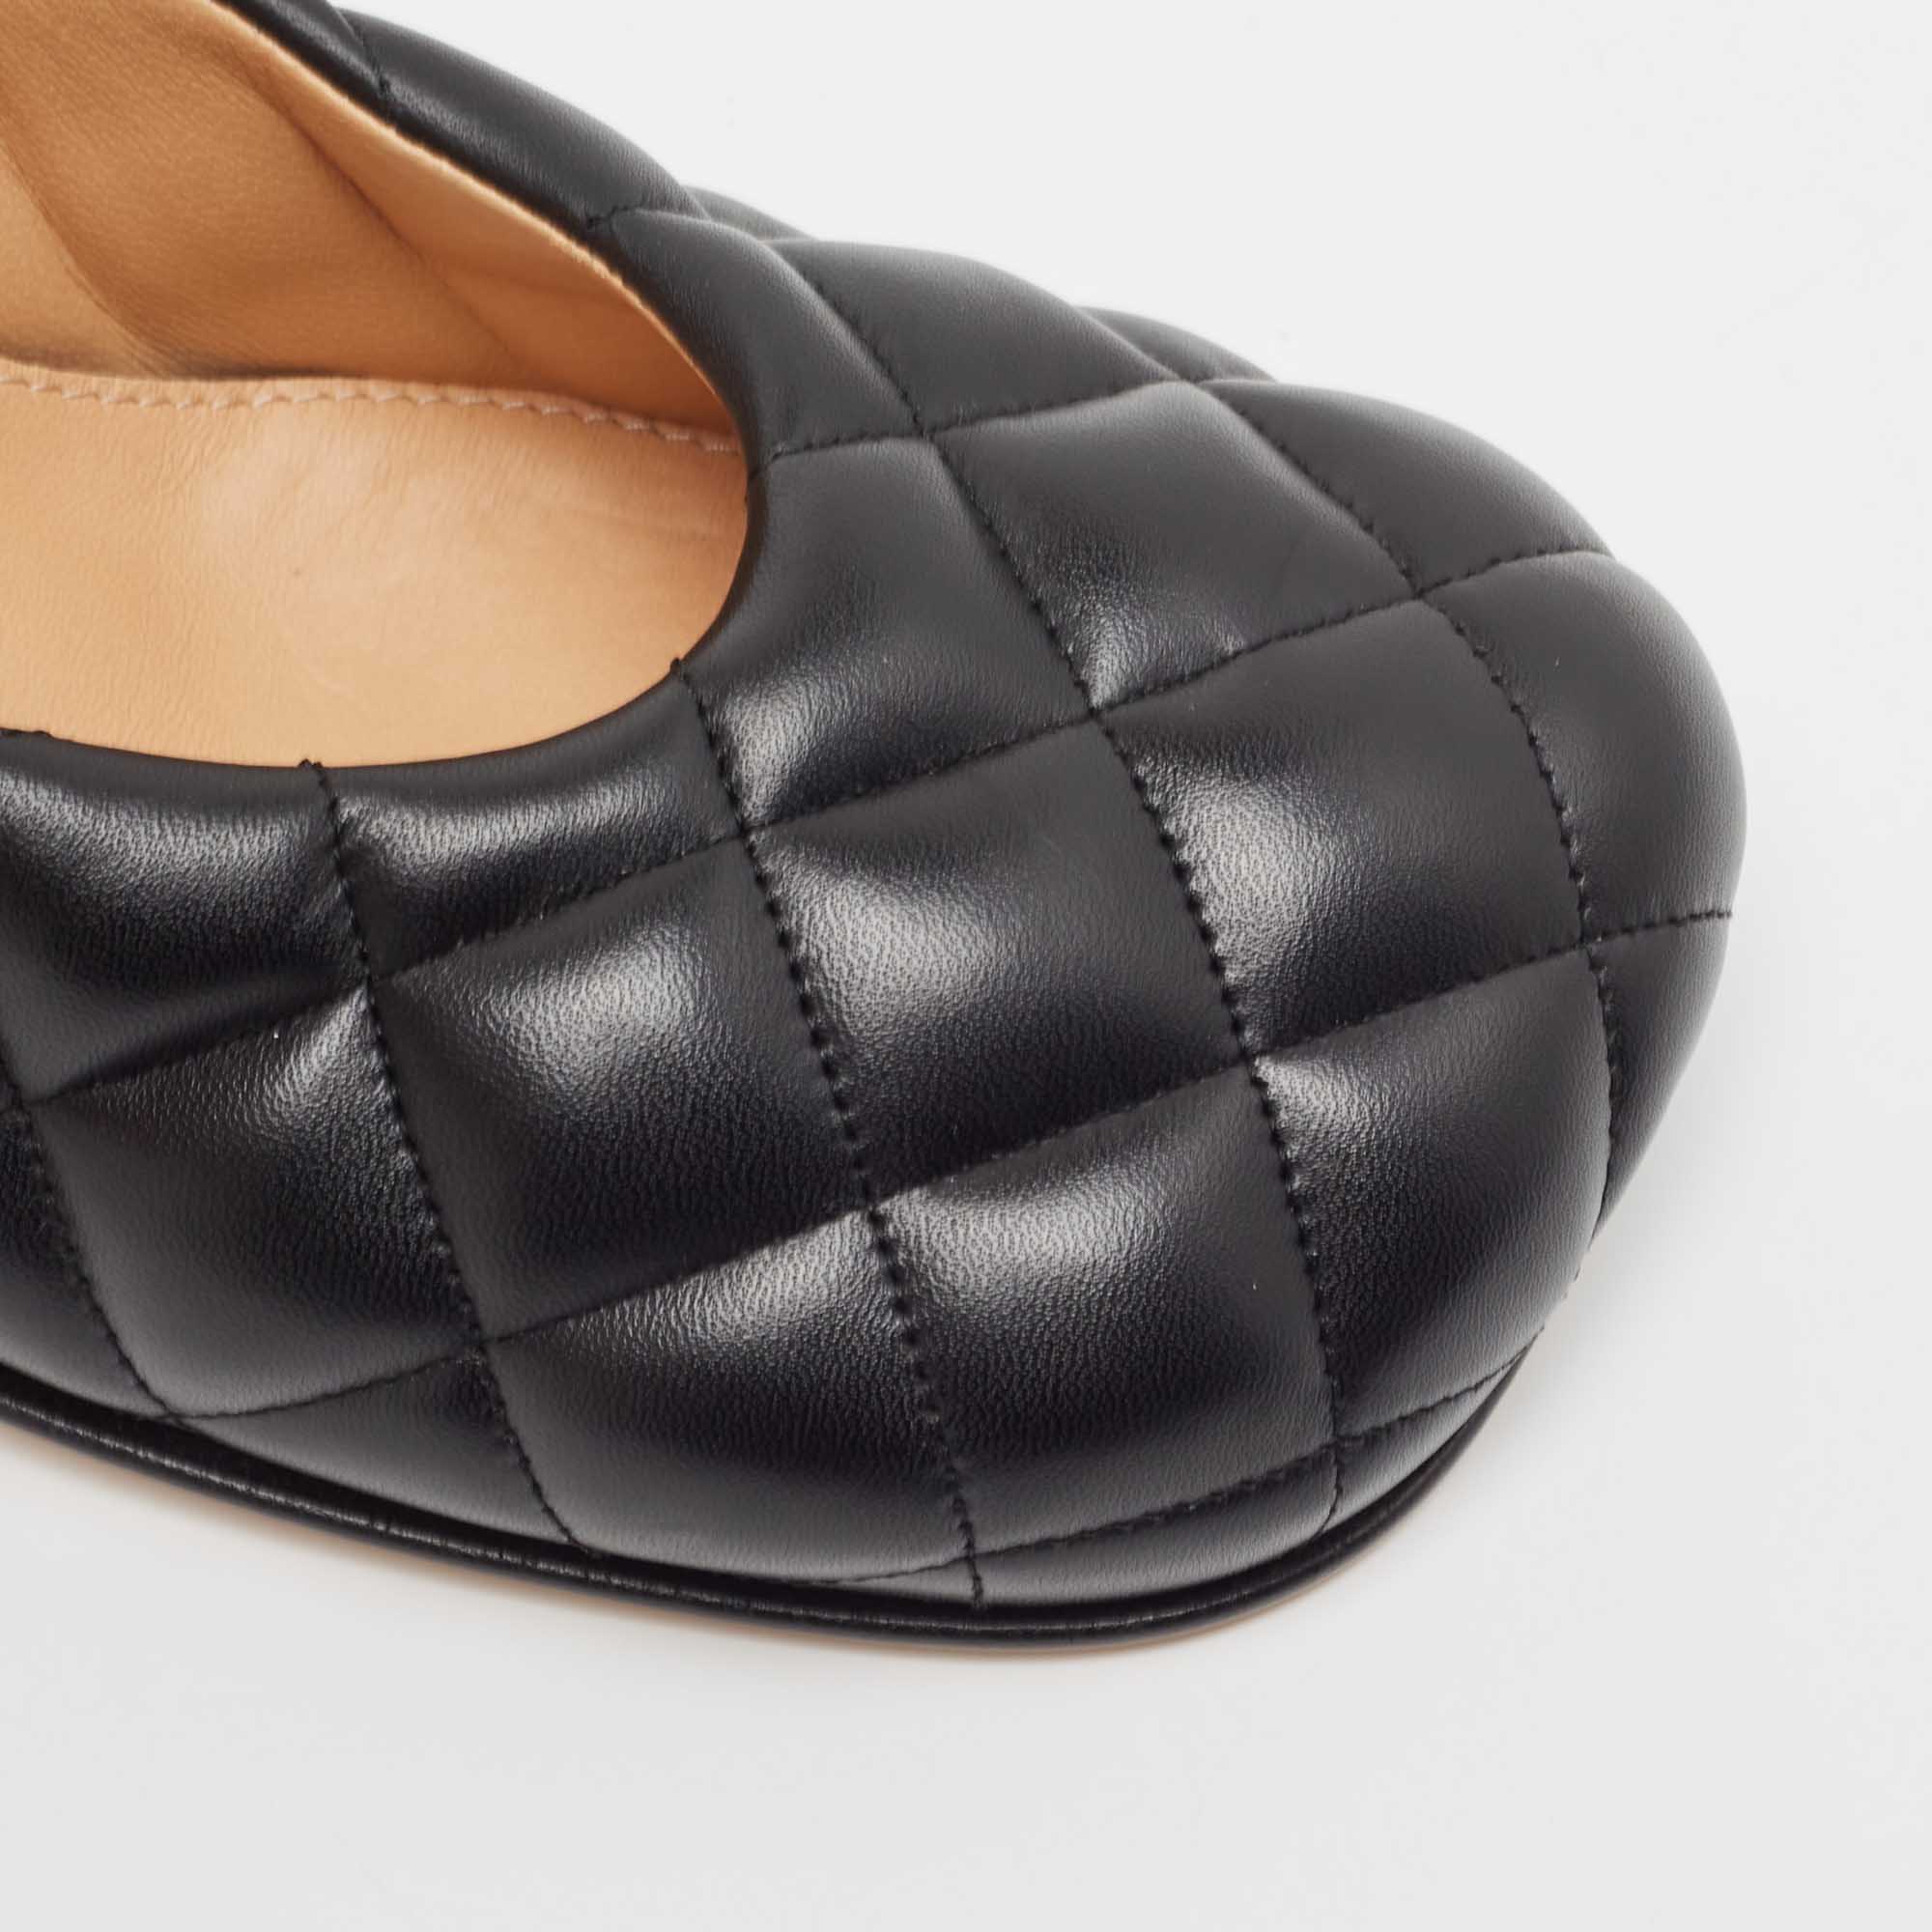 Bottega Veneta Black Quilted Leather Square Toe Pumps Size 38.5